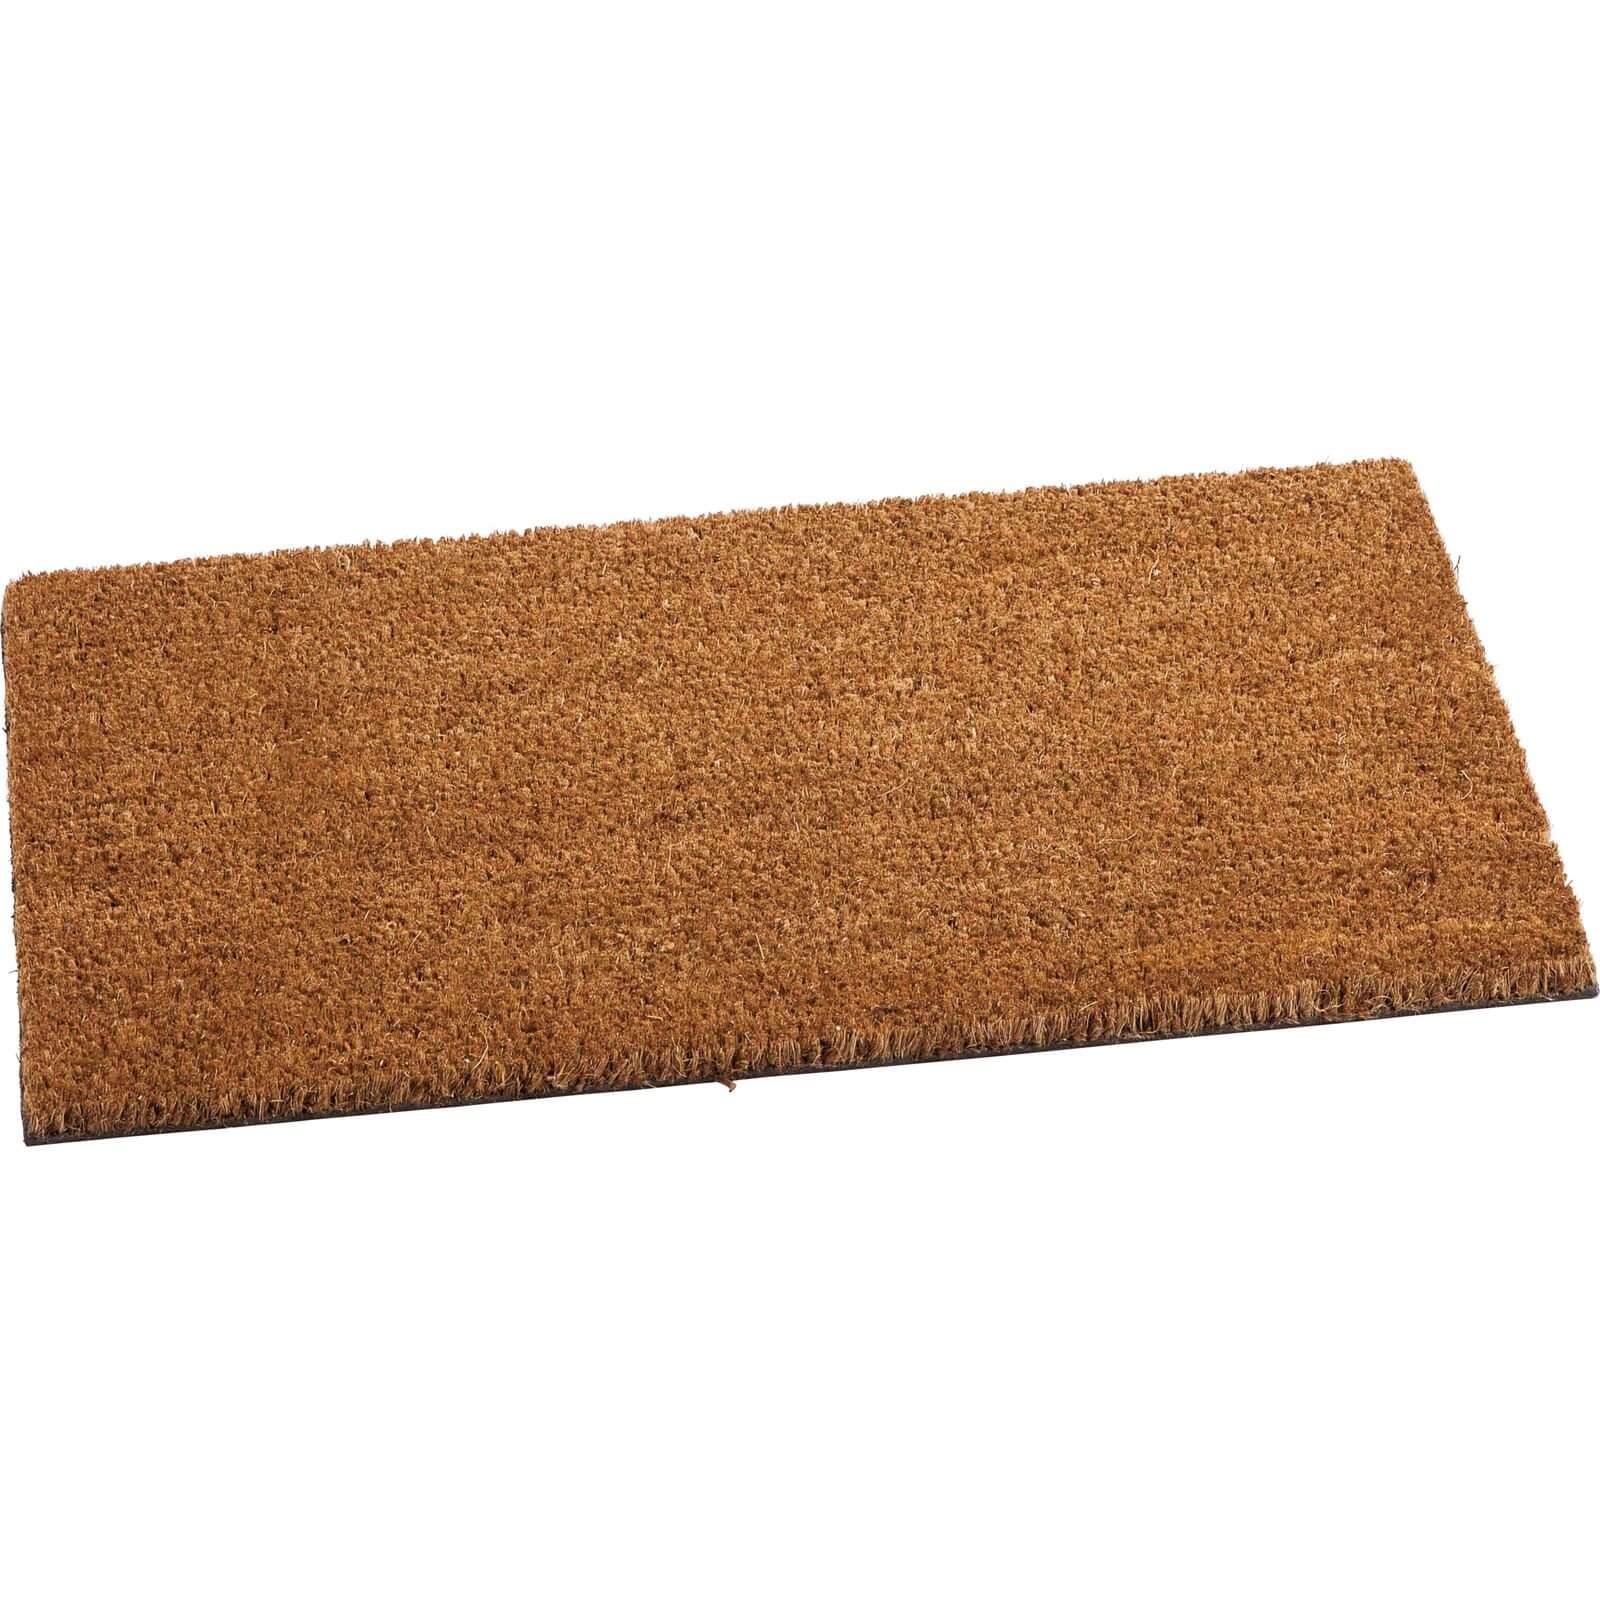 Plain PVC Coir Doormat Small - 40 x 60cm